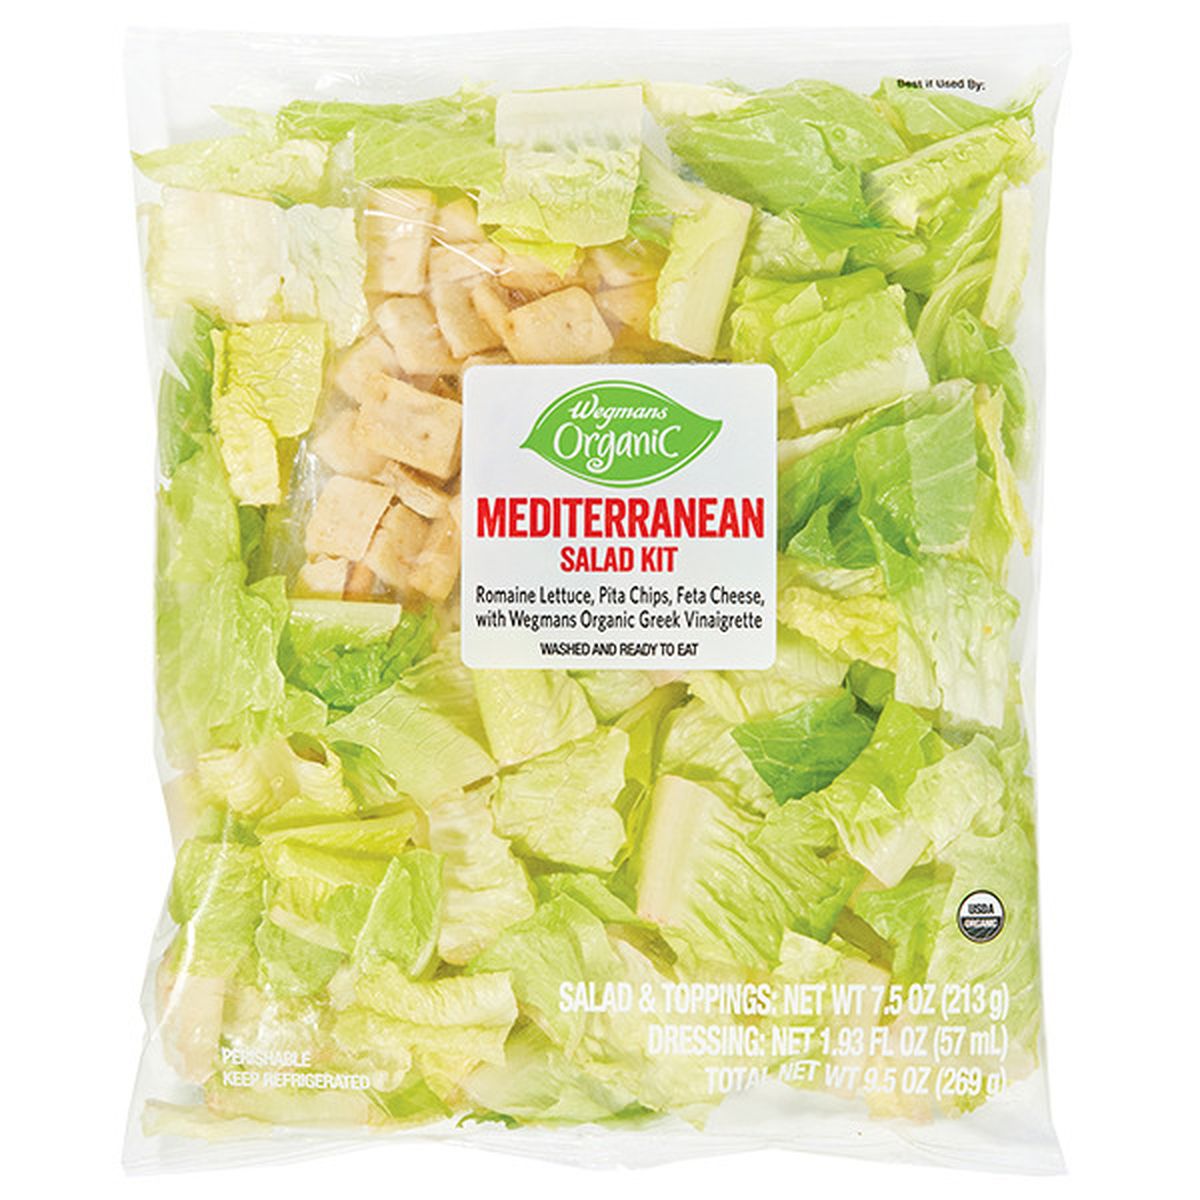 Calories in Wegmans Organic Mediterranean Salad Kit